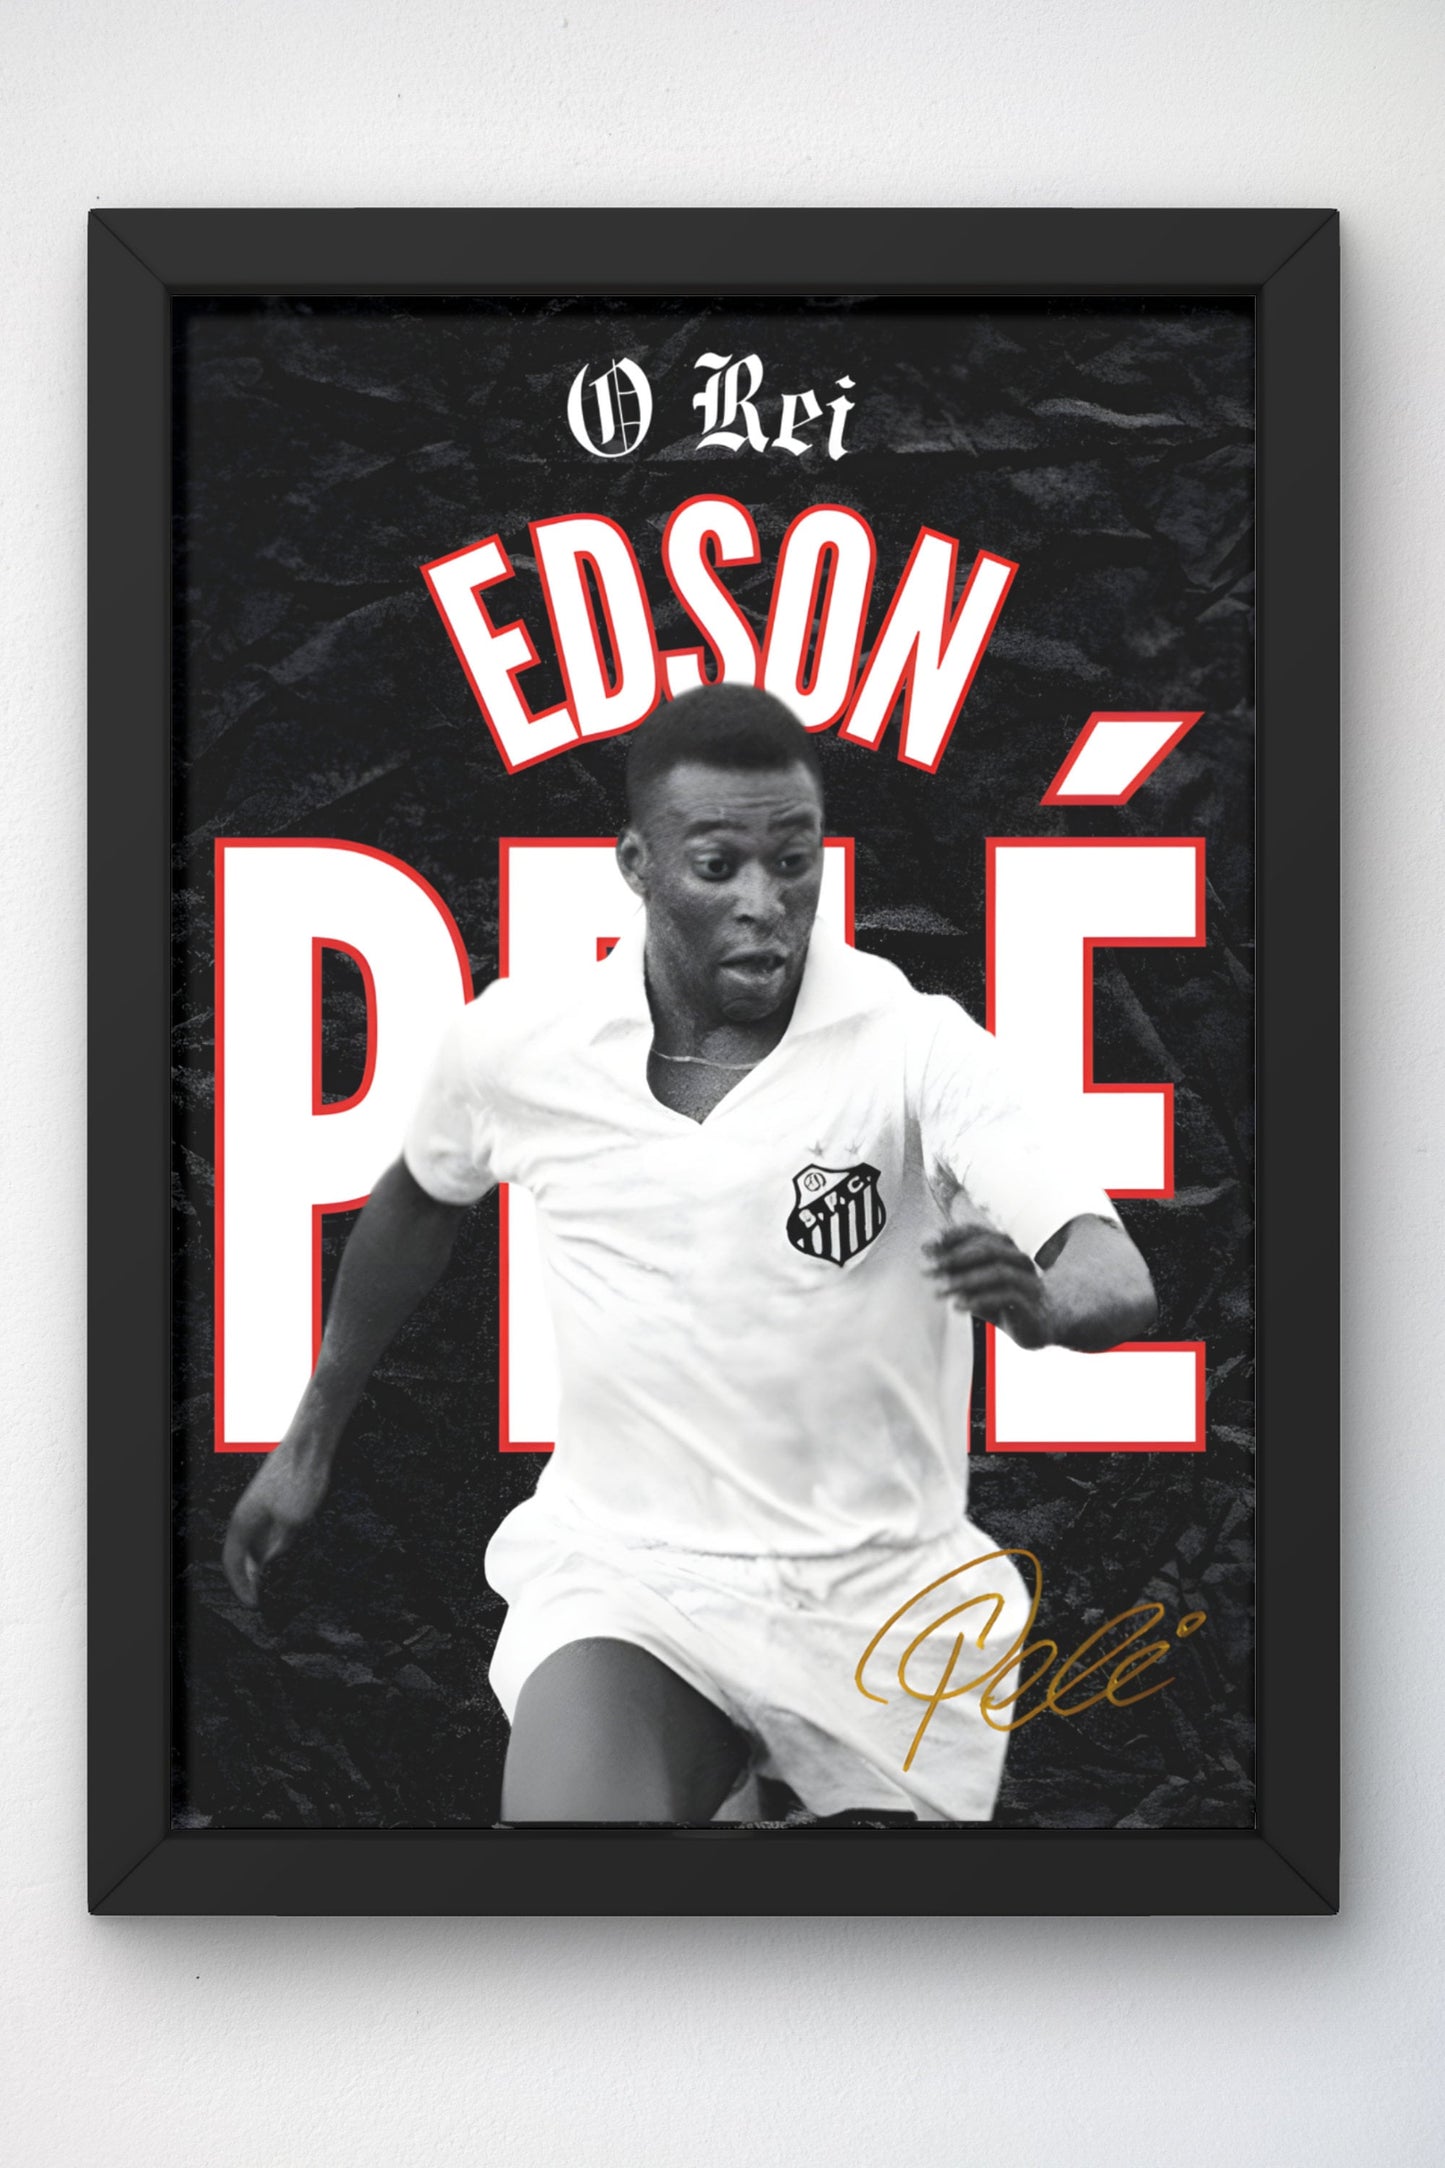 Poster Pelé